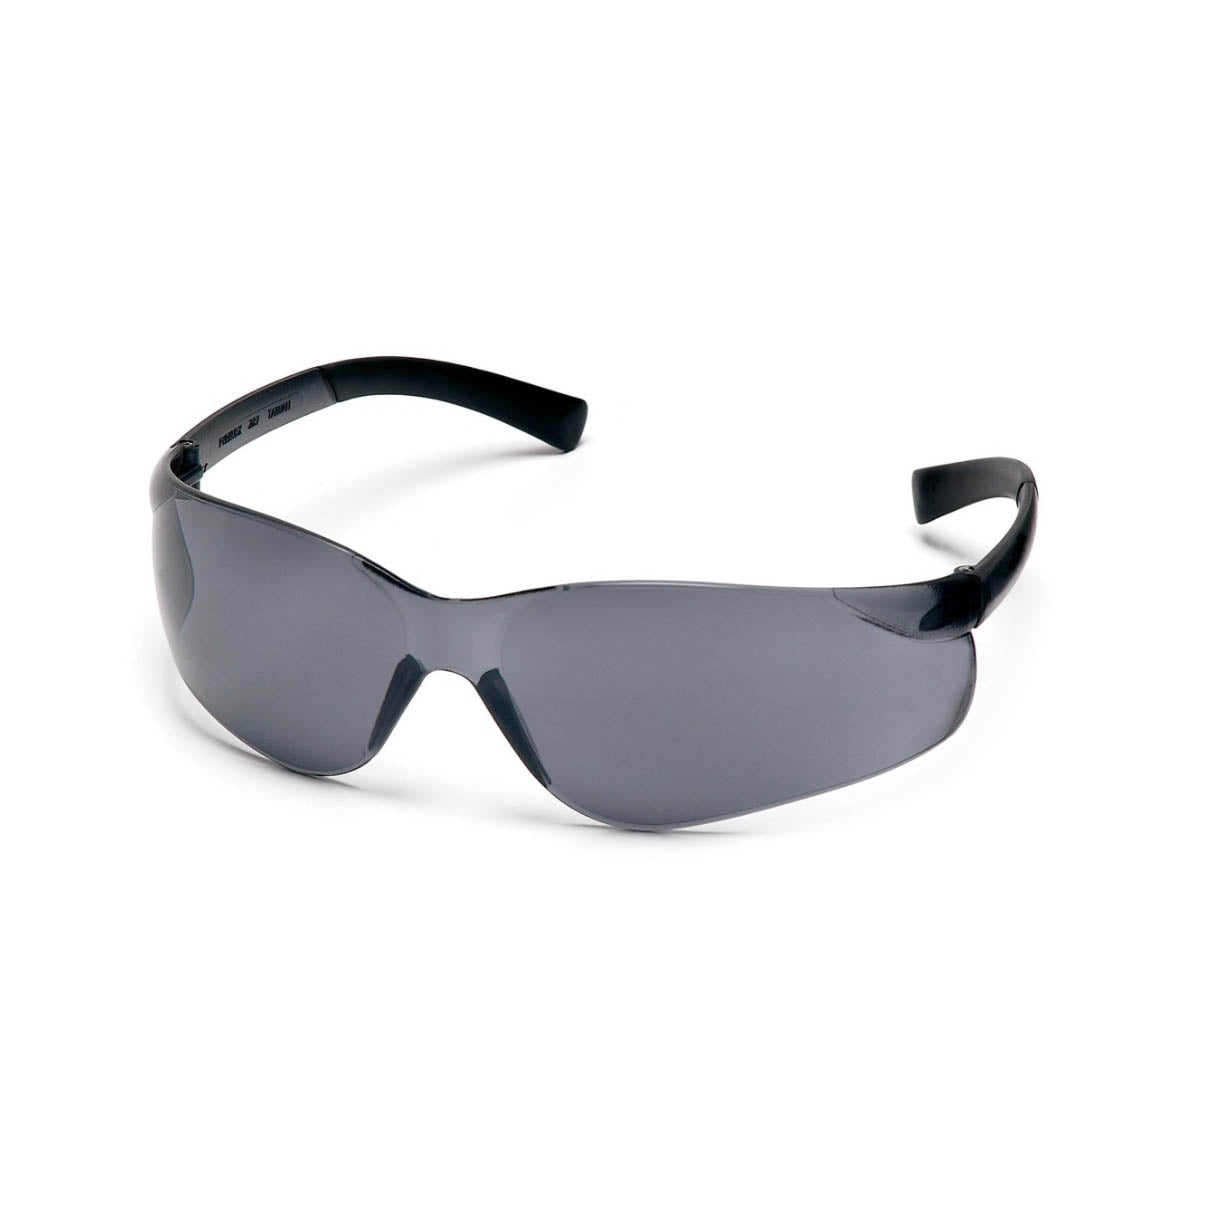 PYRAMEX S2520S Ztek® Safety Glasses Gray Lens Anti-Scratch, Anti-Reflective